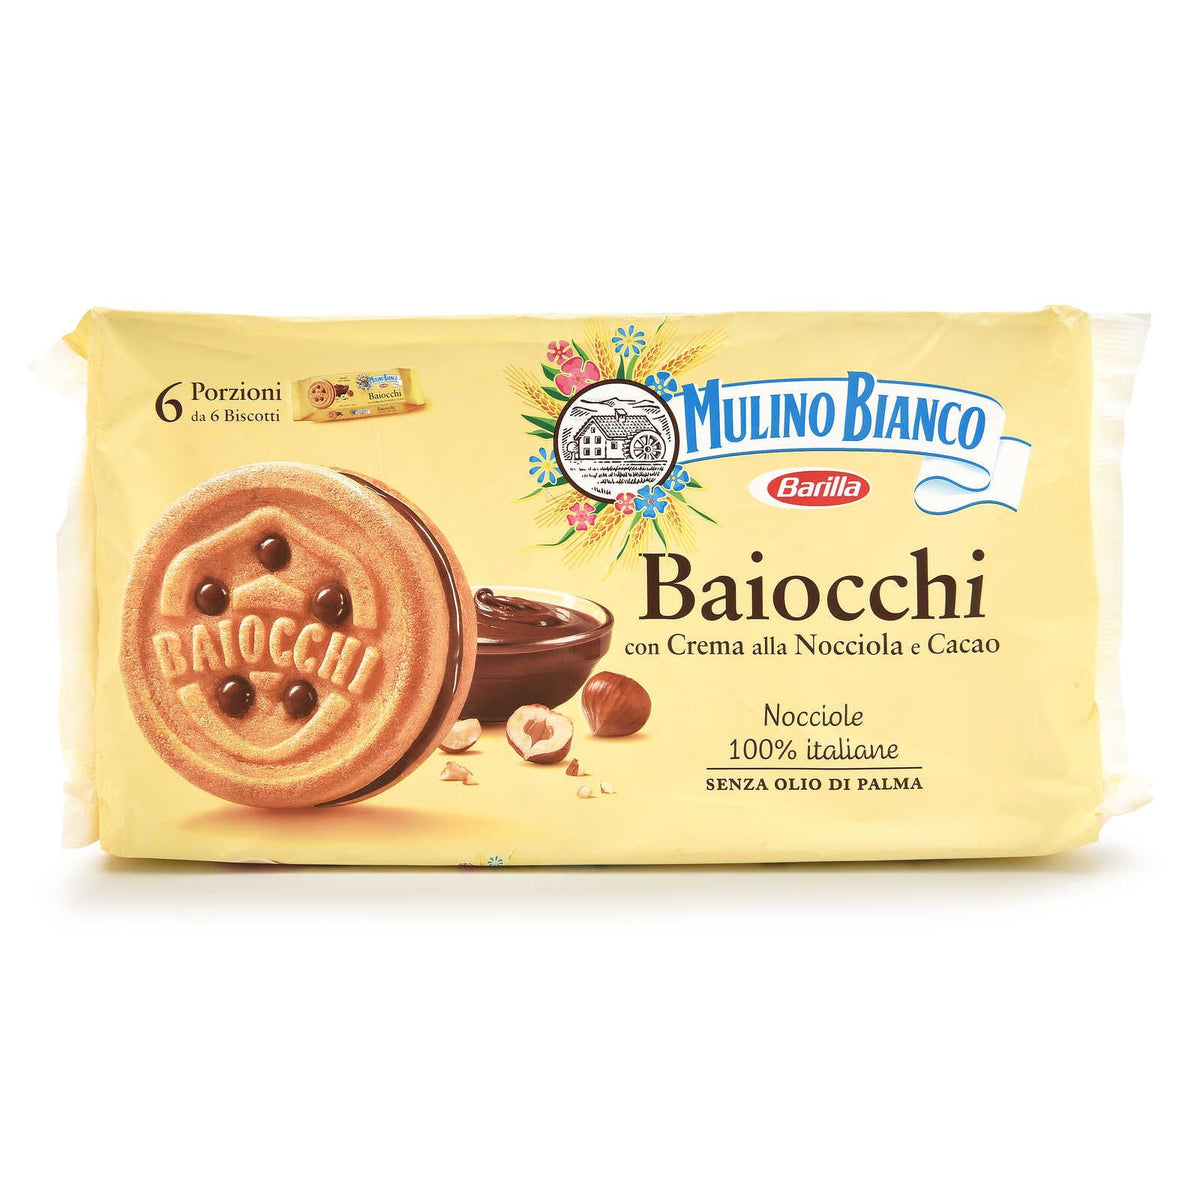 Shopmium  Biscuits Baiocchi 6 portions